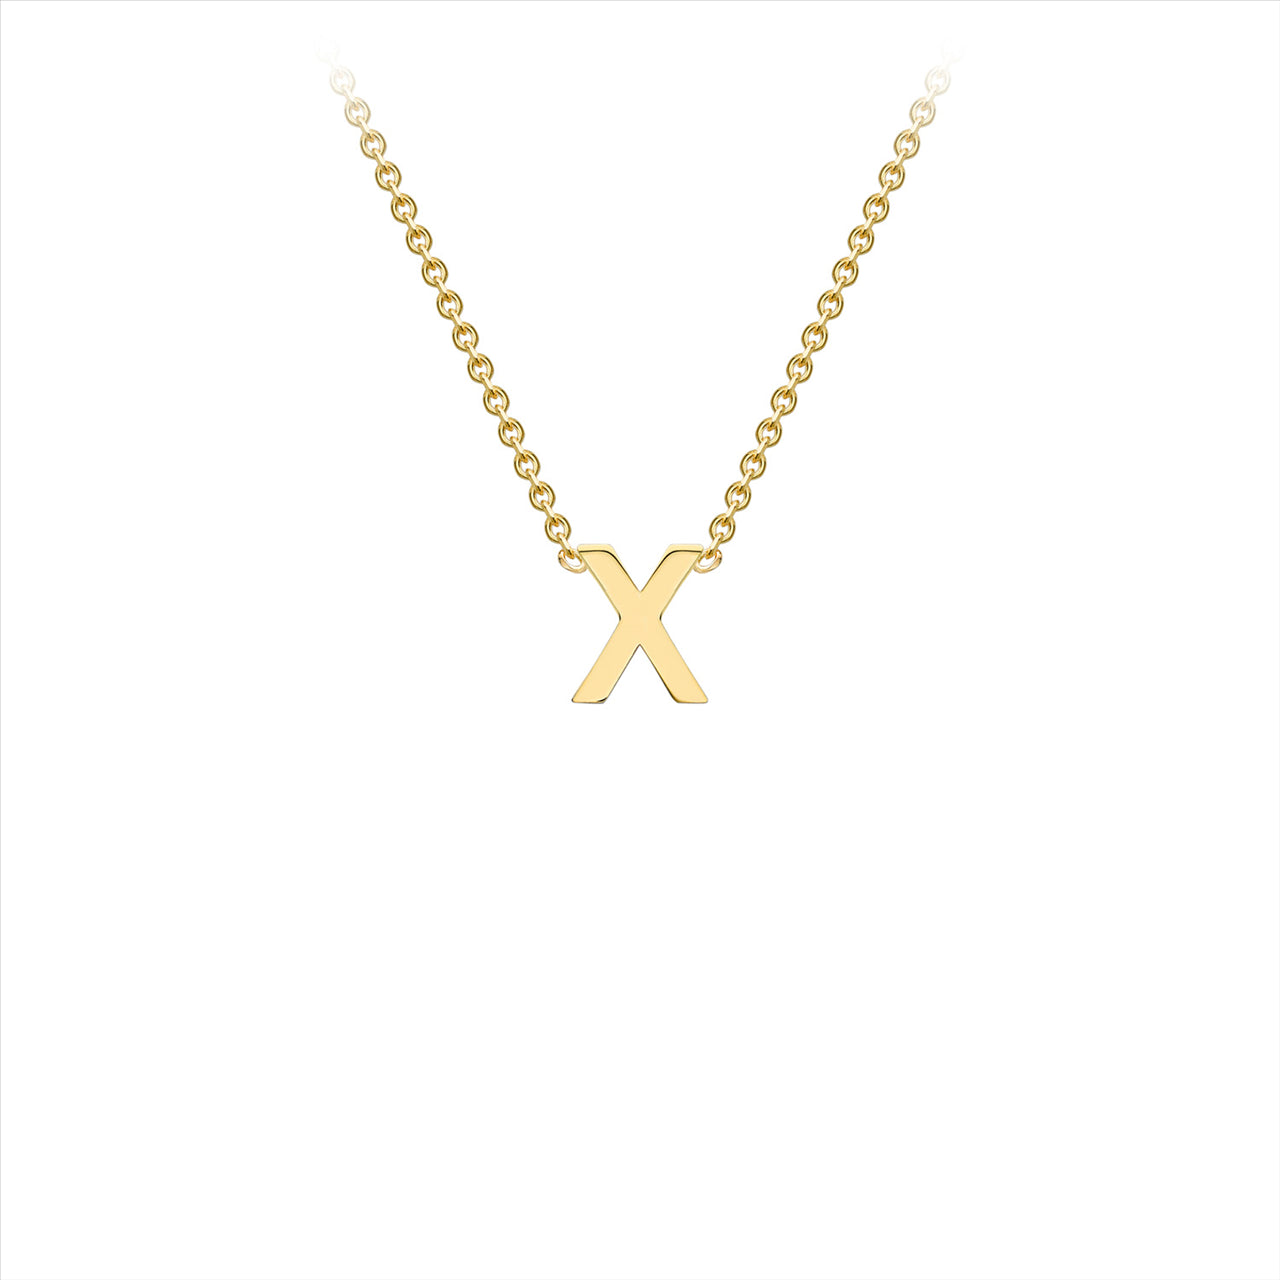 9ct Y/G Initial Letter "X" Necklace 38+5cm